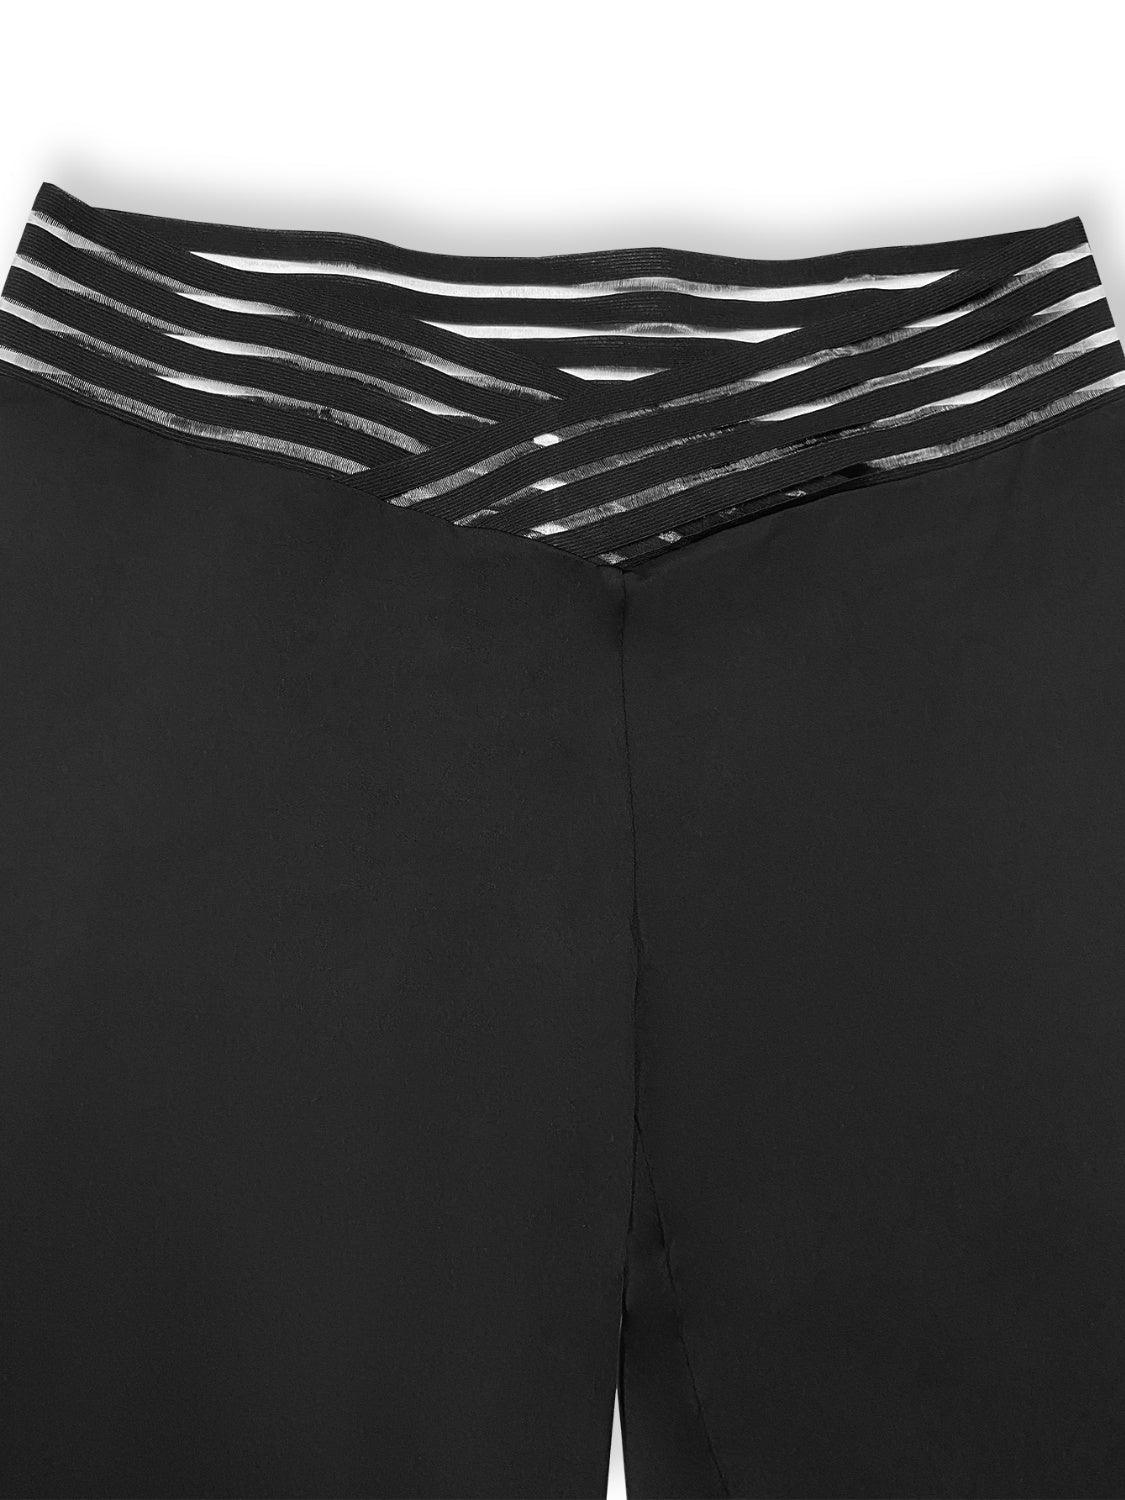 a close up of a woman's black pants